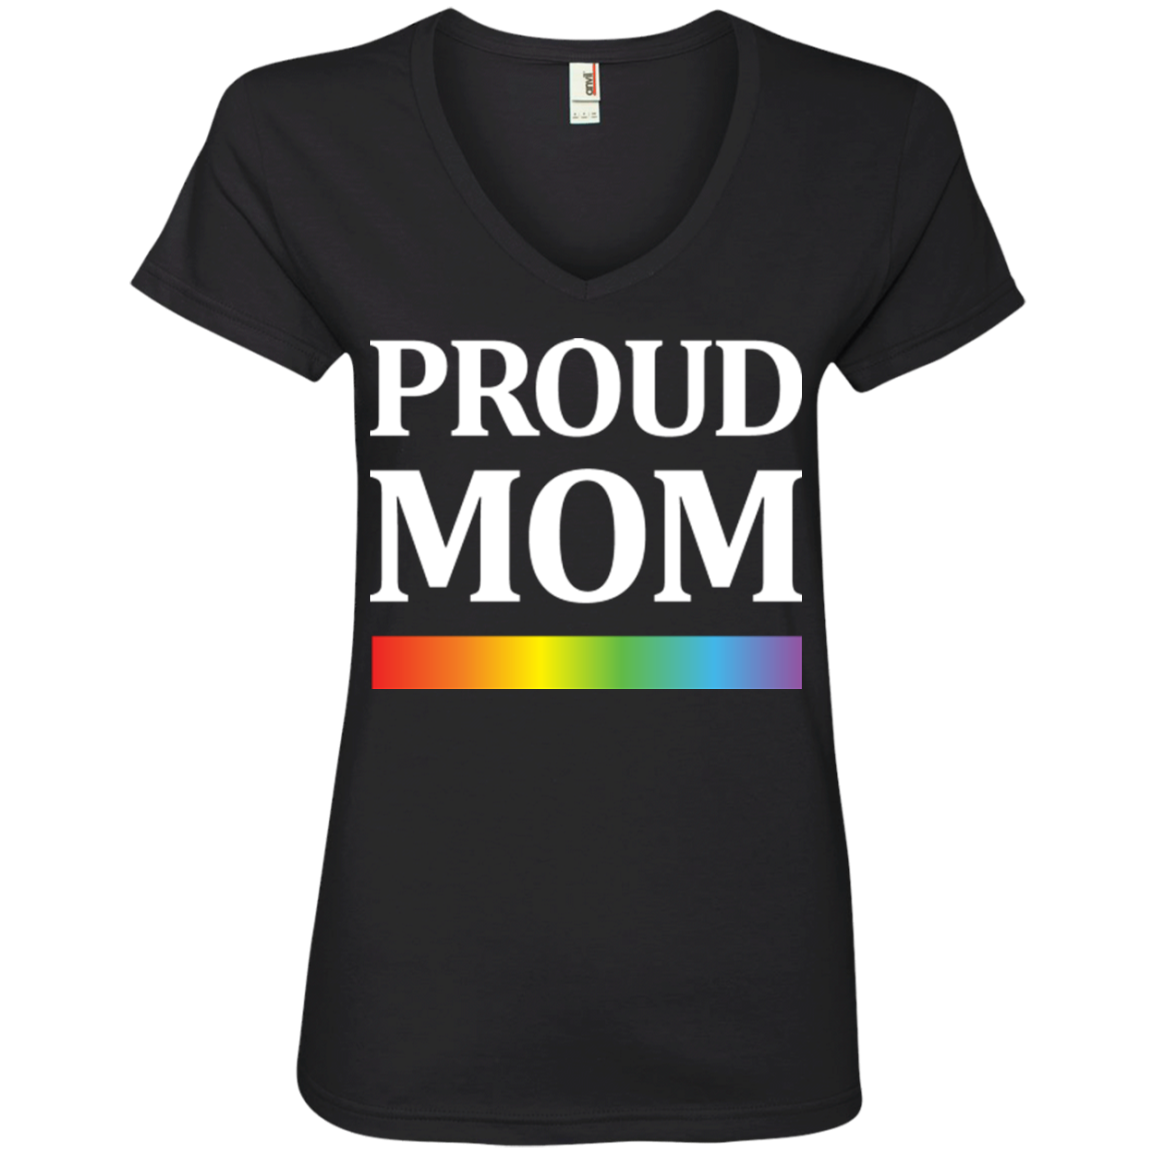 LGBT Pride "Proud Mom" V-neck black tshirt for women